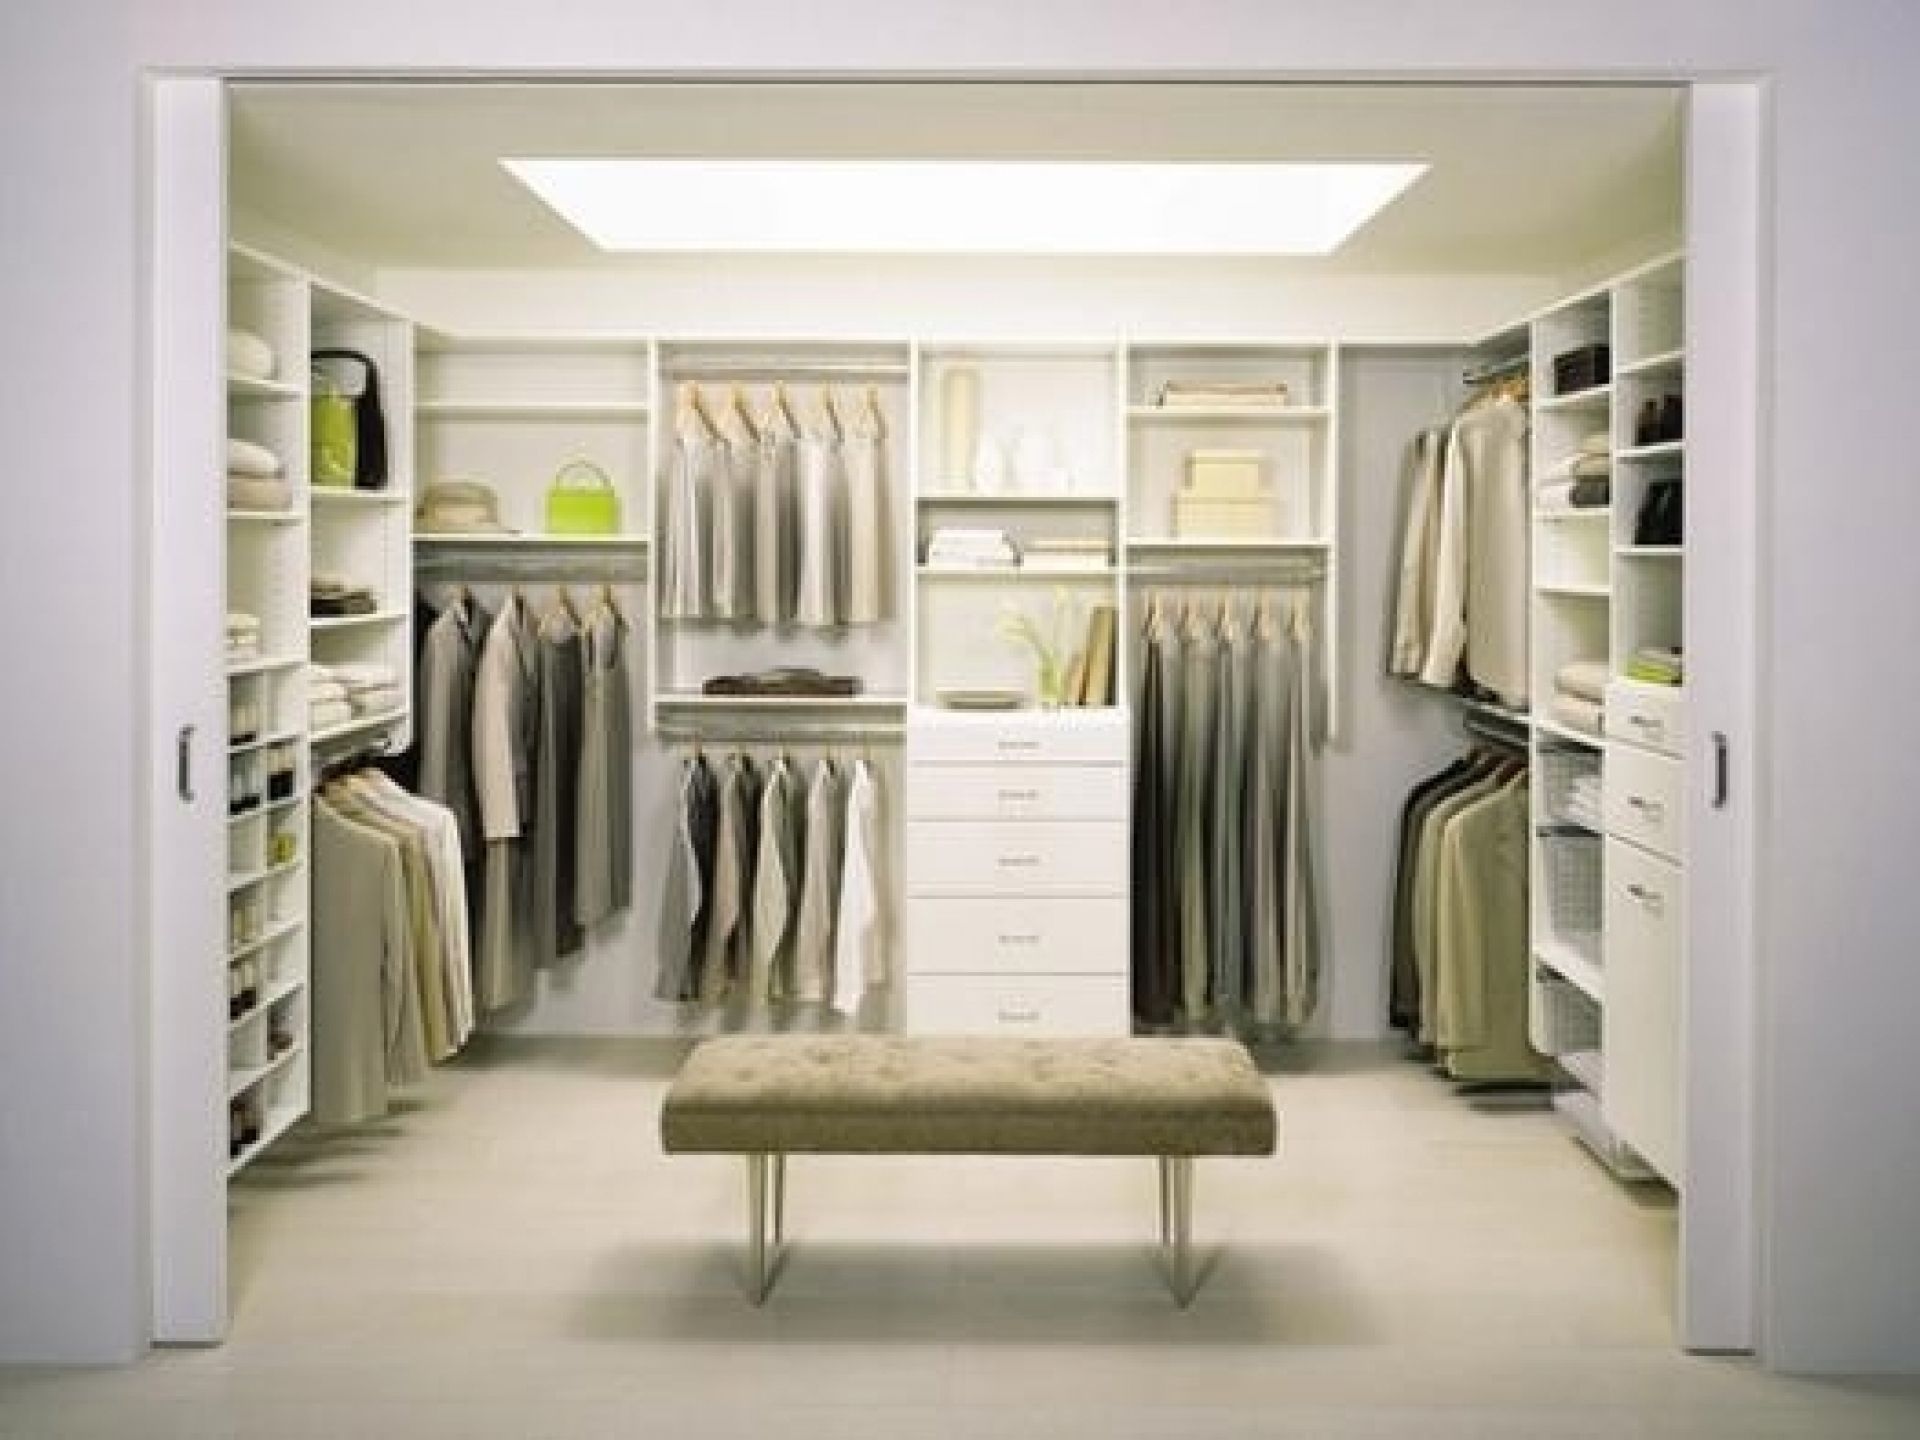 The Installation of Closet Organizers Ikea